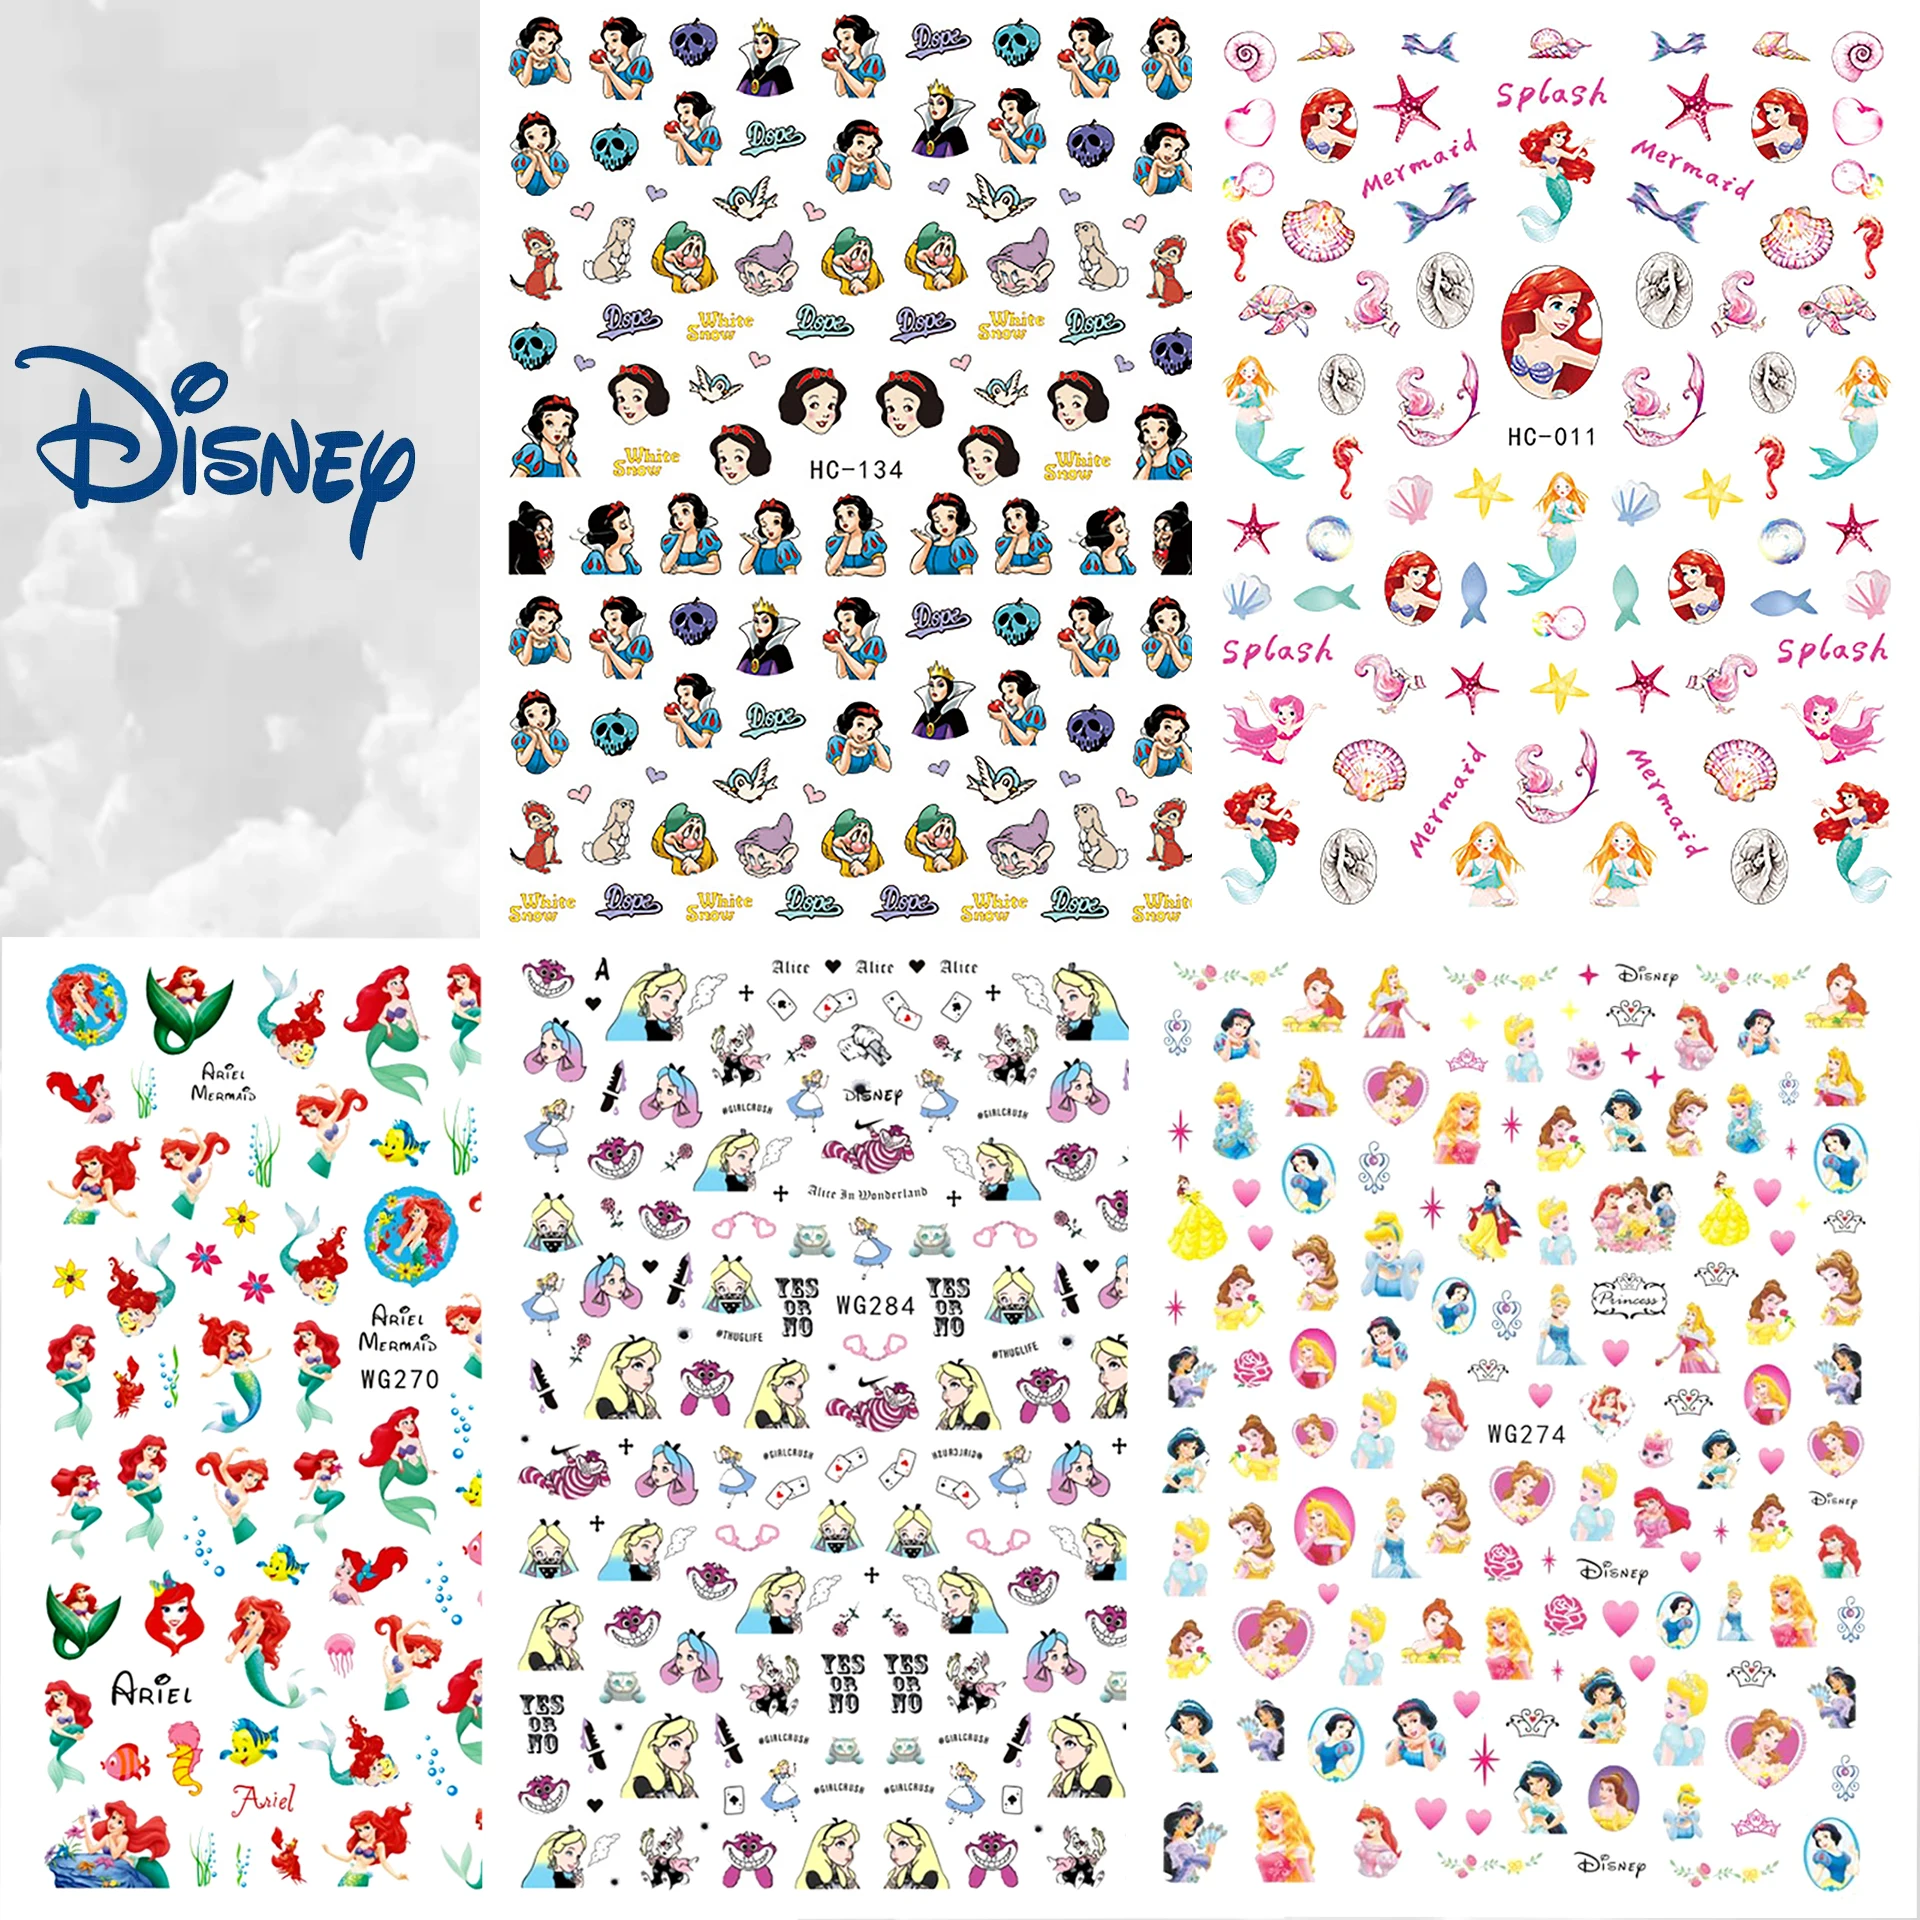 Cartoons Disney Prinzessin Nagel Aufkleber Nagel Sliders Nagel Kunst Liefert Anime Stich Winnie the Pooh Nagel Abziehbilder Nagel Dekorationen